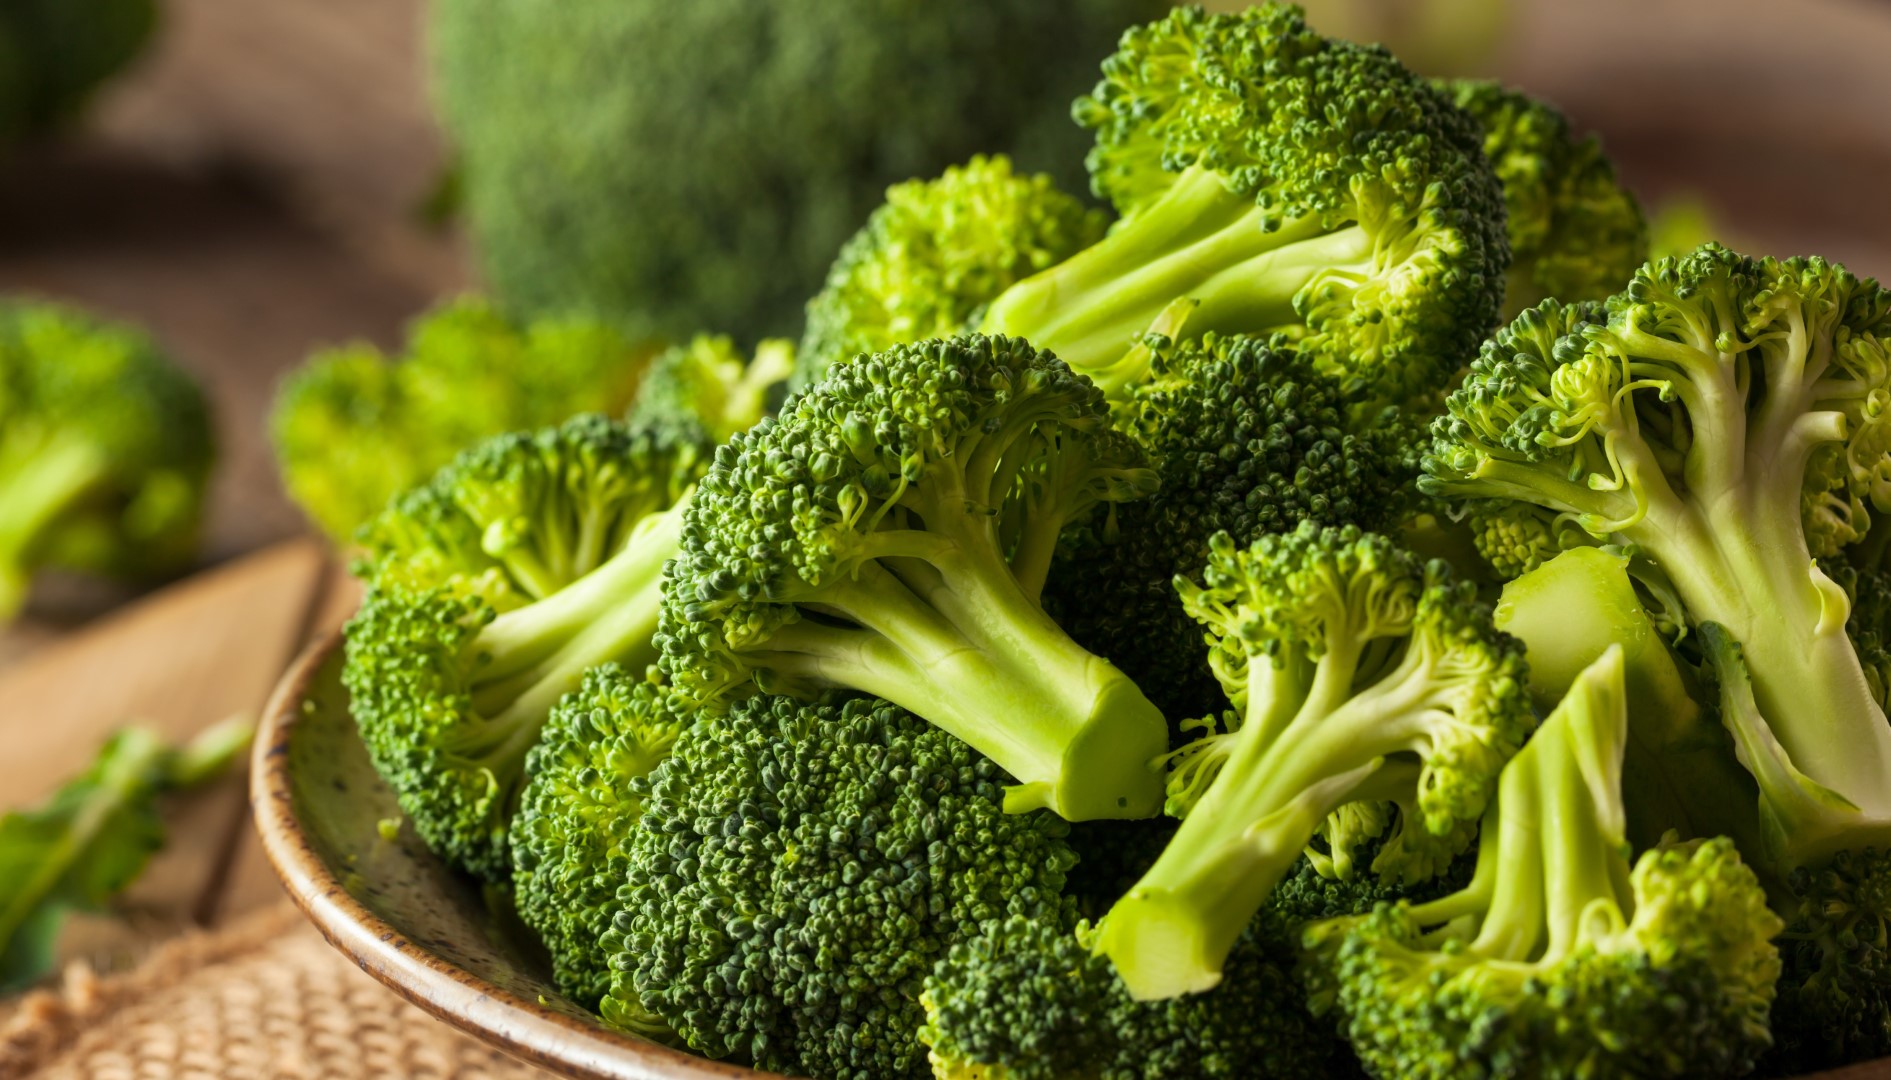 An assortment of broccoli